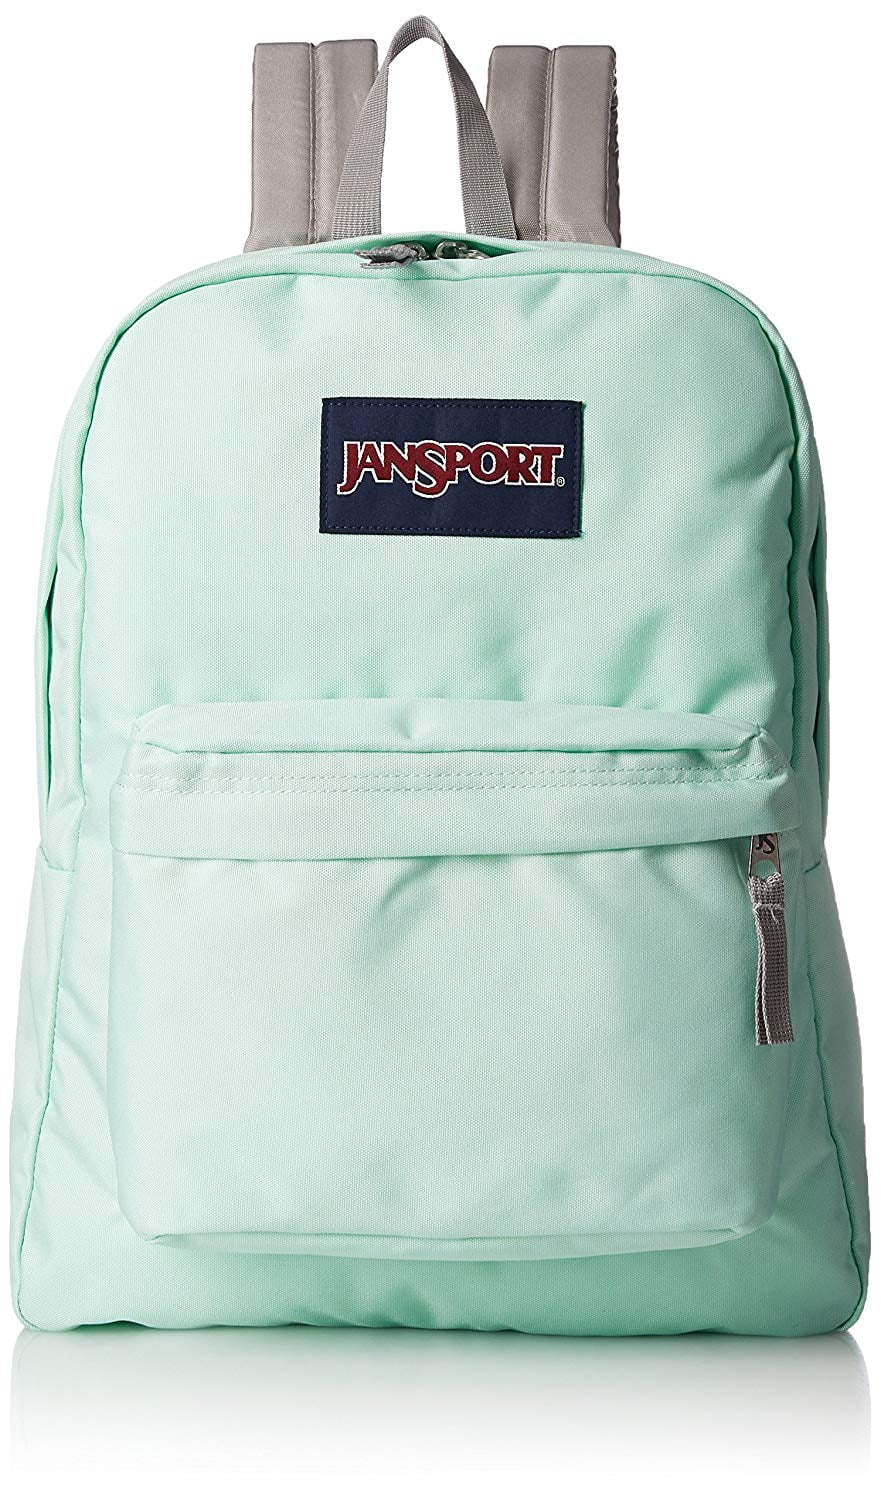 Jansport Superbreak Backpack - Brook Green - Js00T5010Rc - Walmart.com